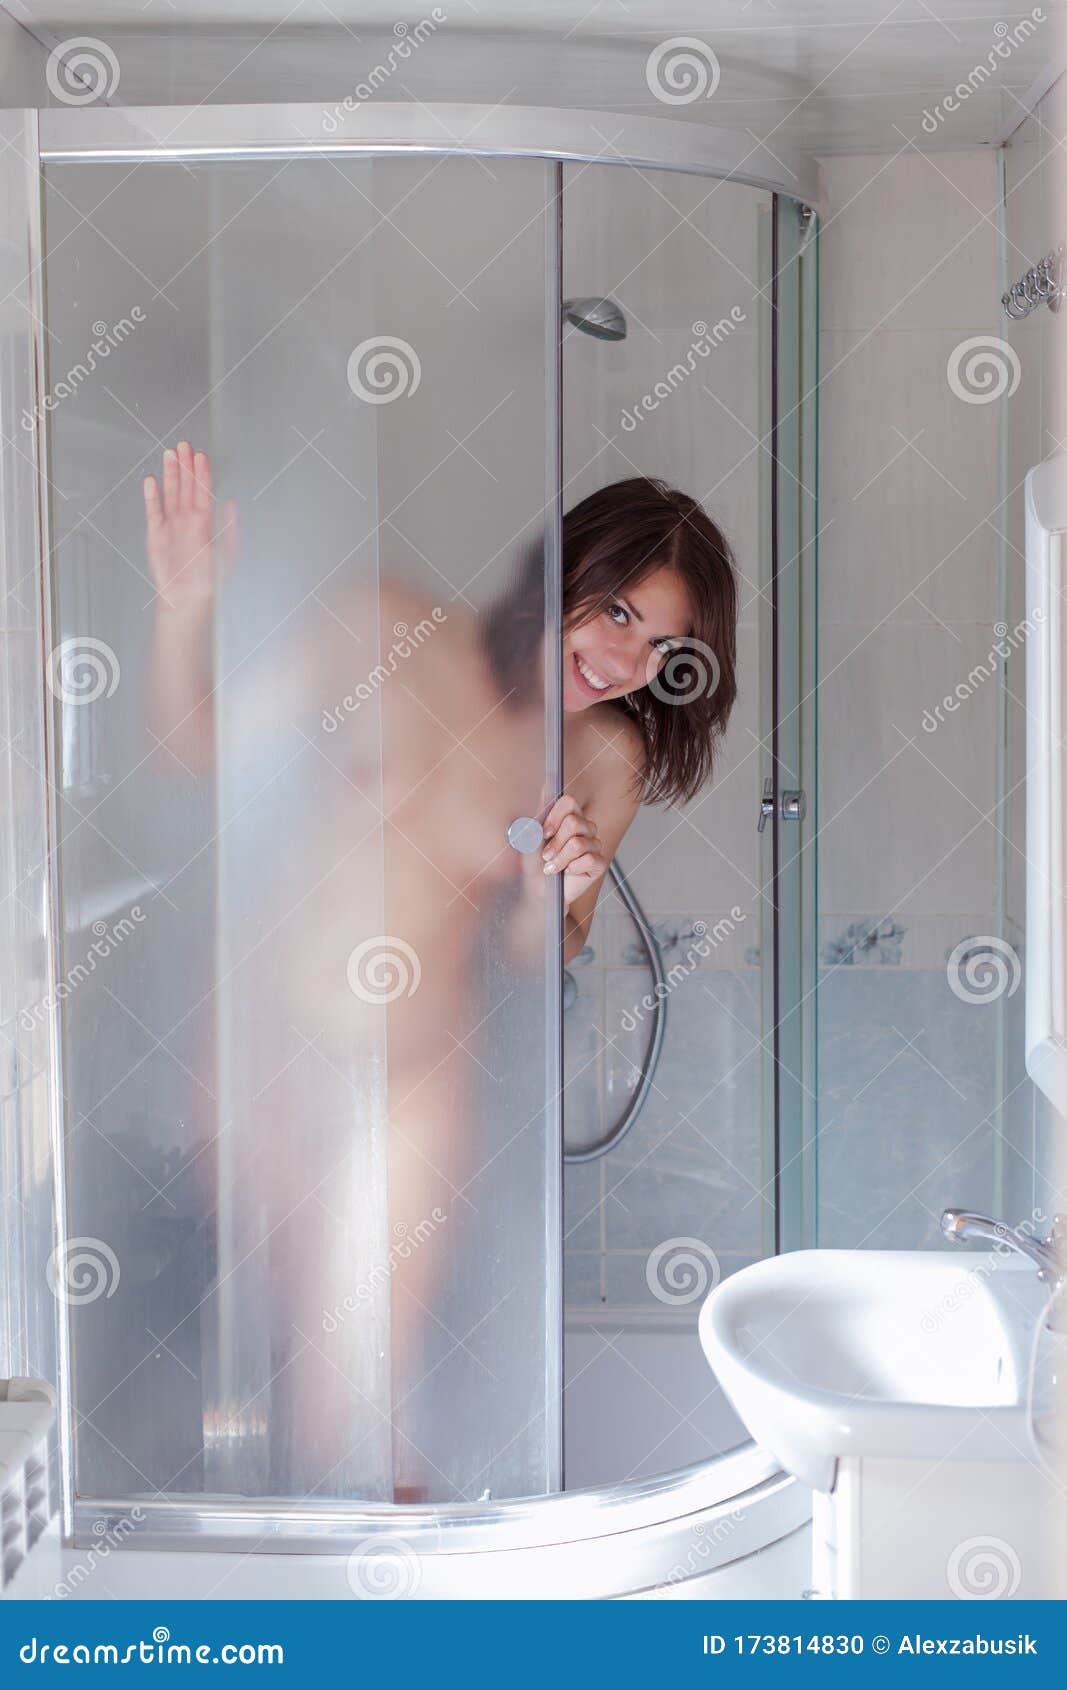 a girl in bathroom